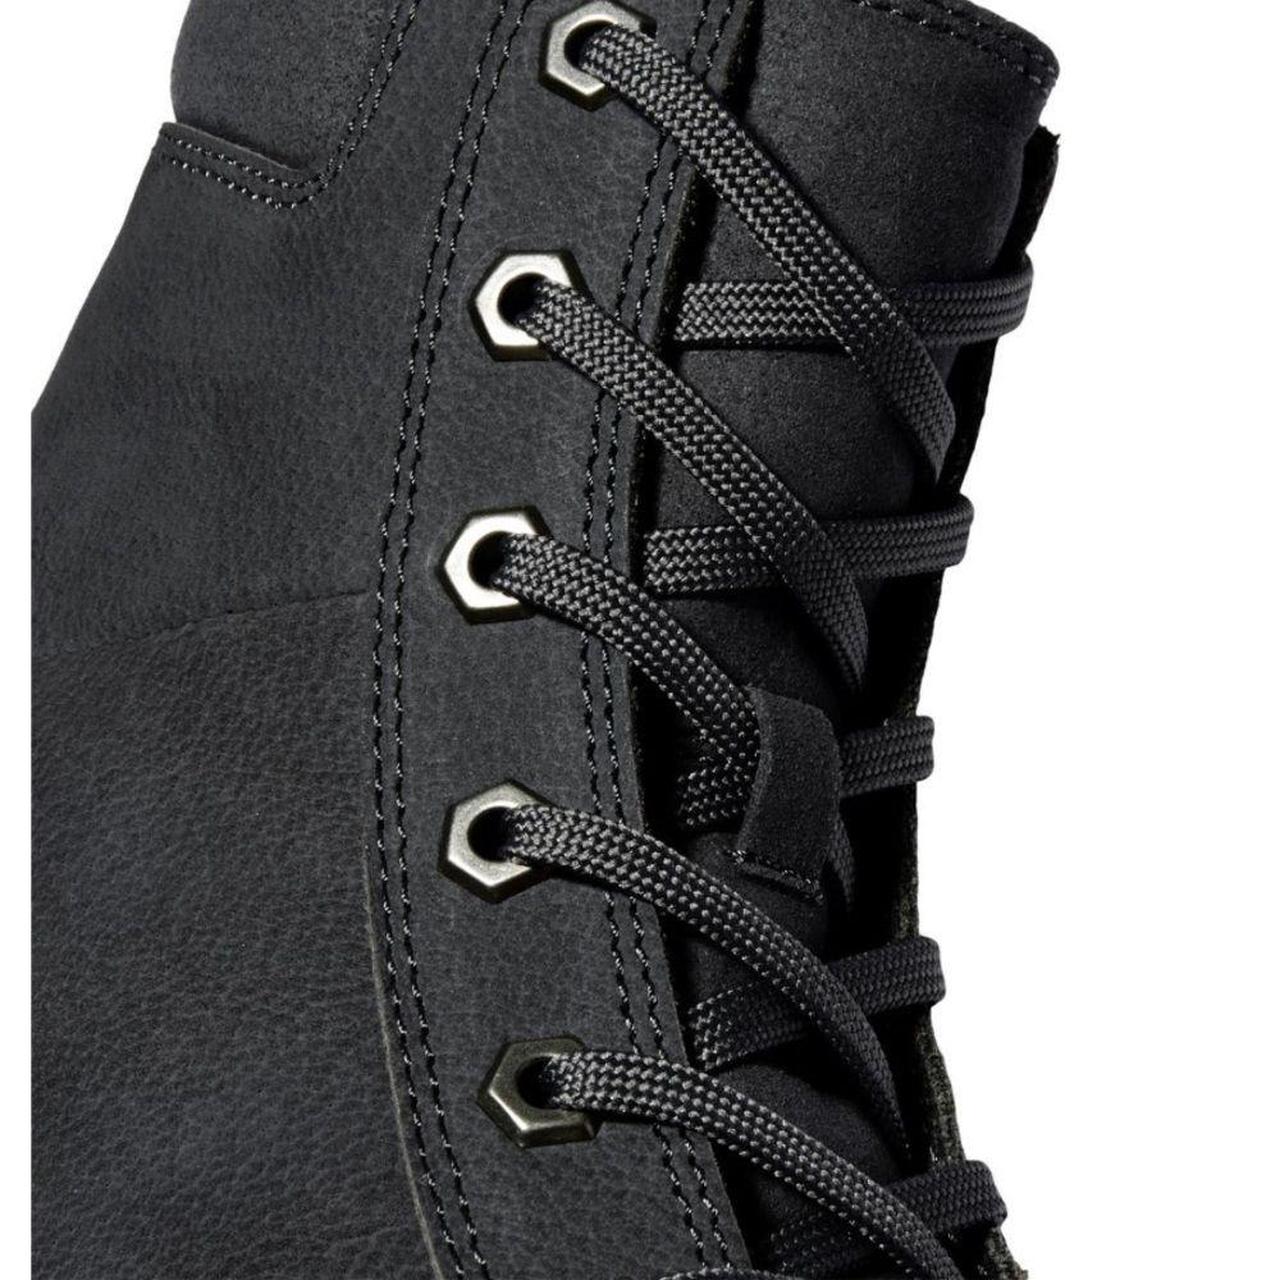 Product Image 4 - TIMBERLAND Skyla Bay Sneaker Boot
Size: